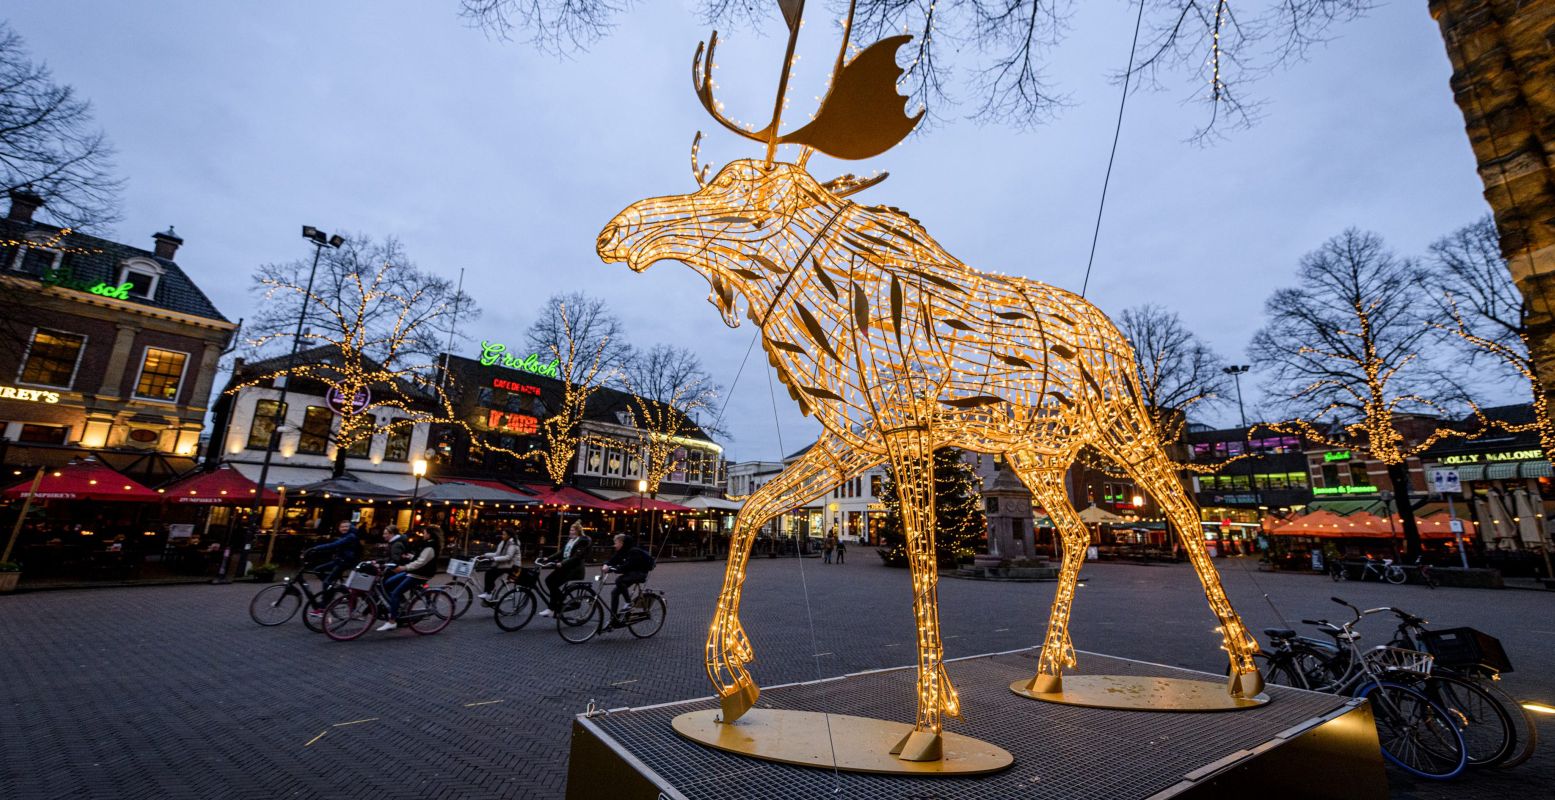 Henri The Moose op de Oude Markt in Enschede. Foto: Enschede Promotie © Emiel Muijderman